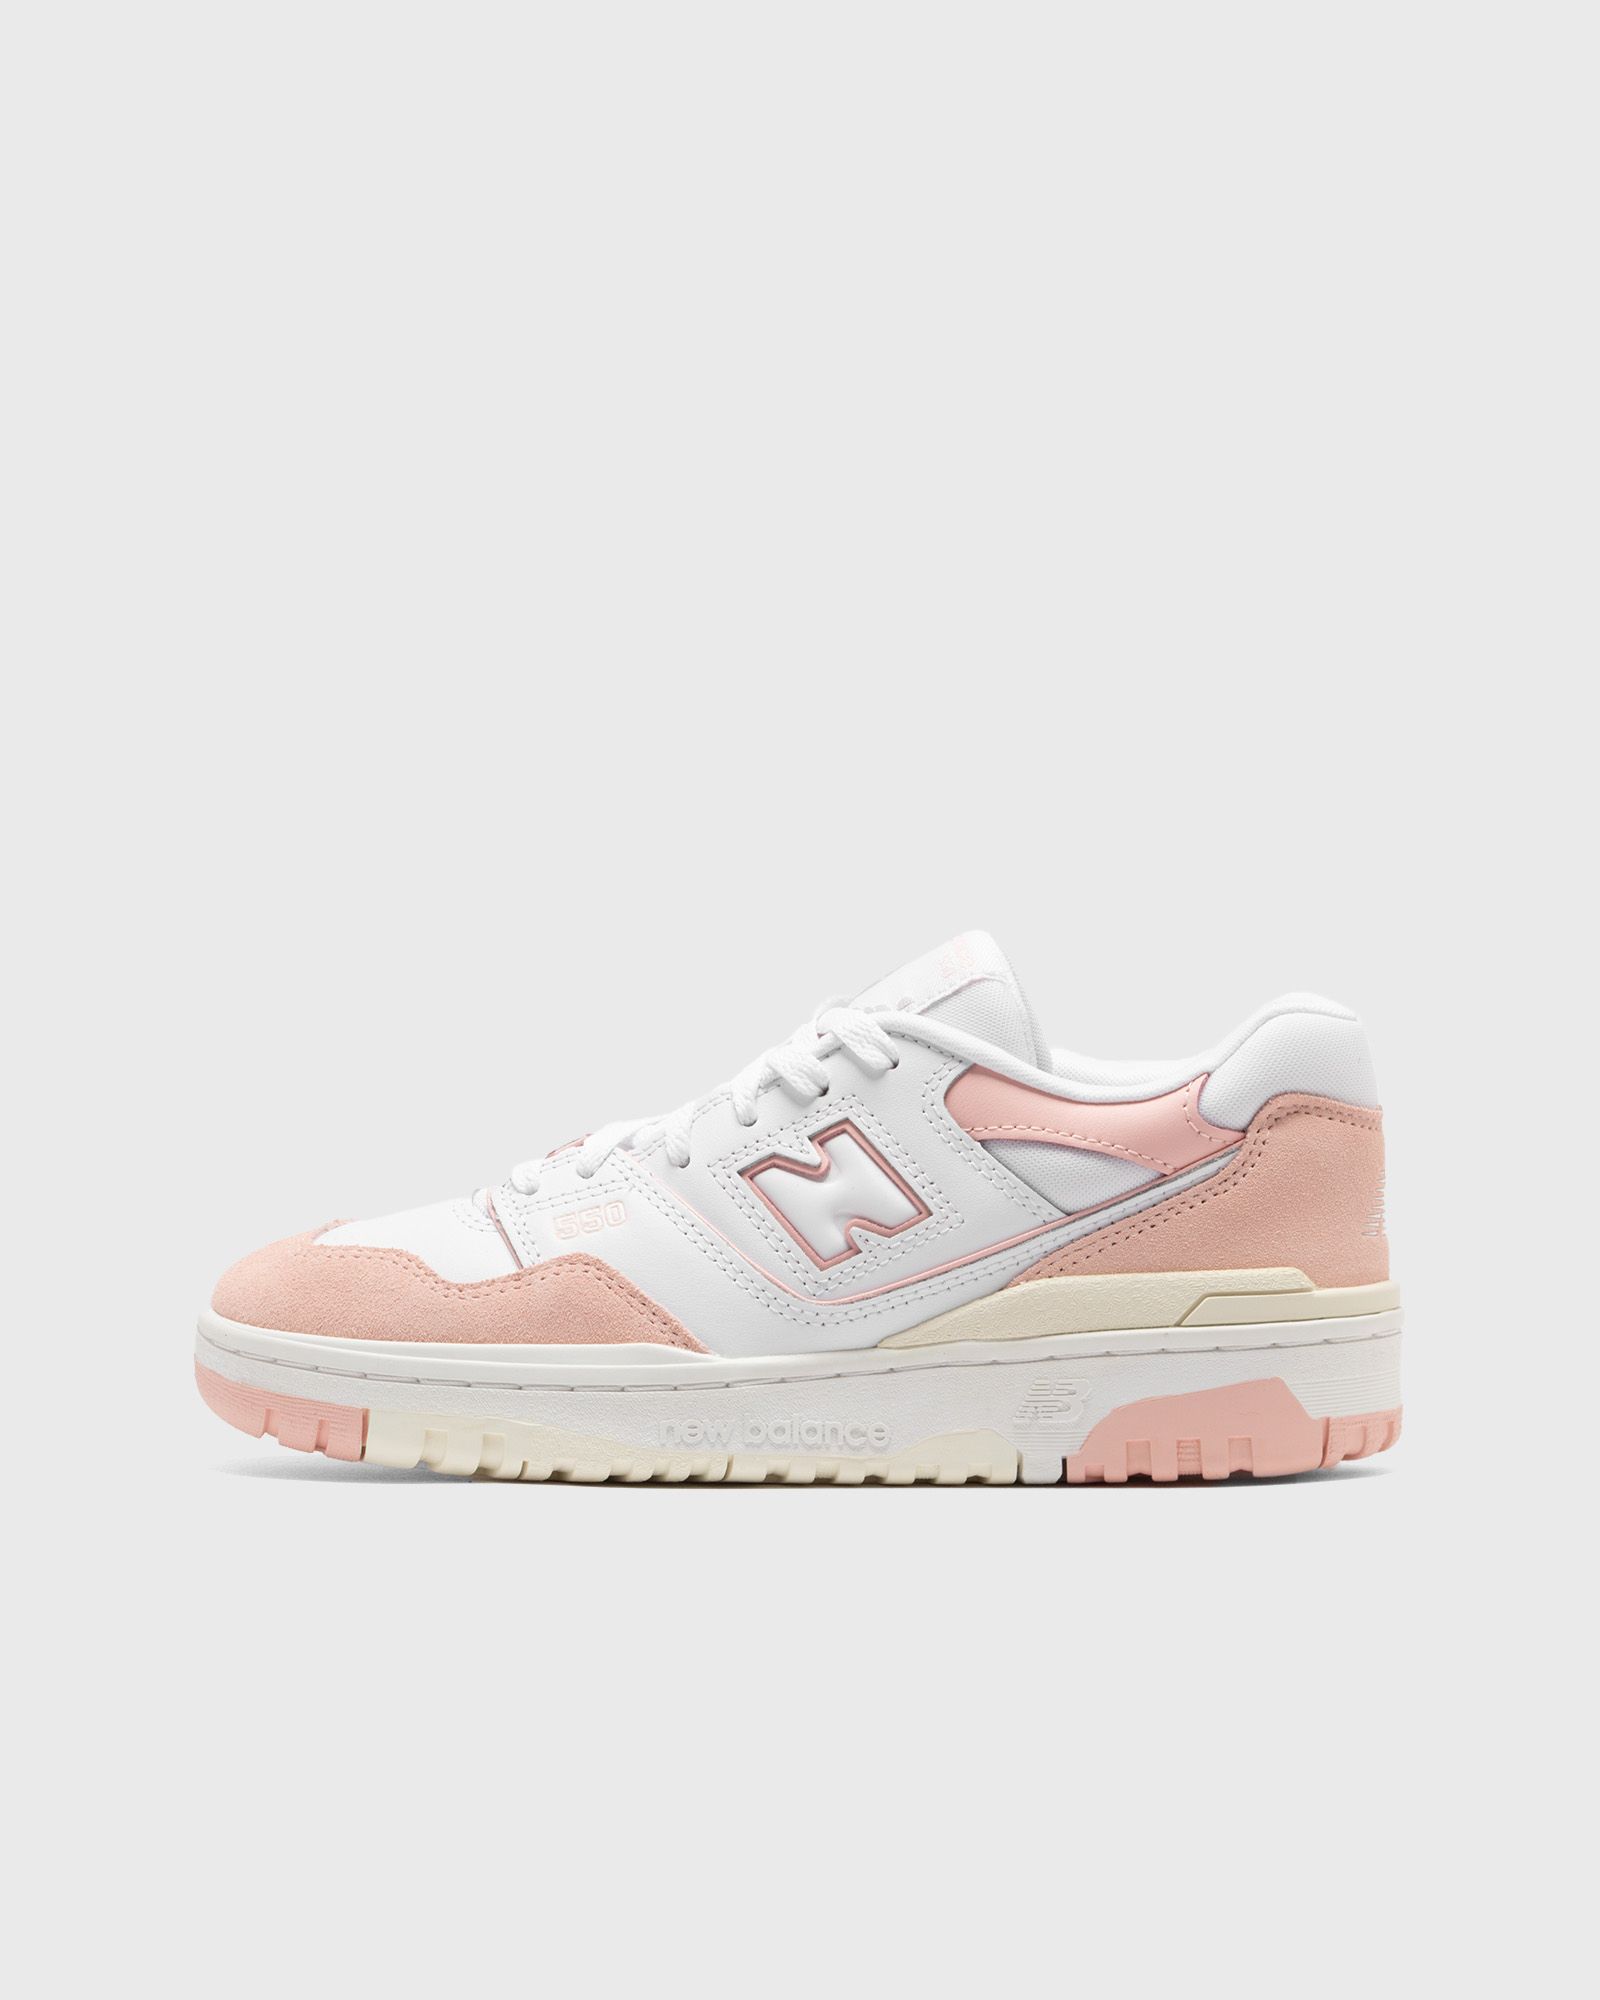 New Balance - 550 women sneakers|lowtop pink|white in größe:37